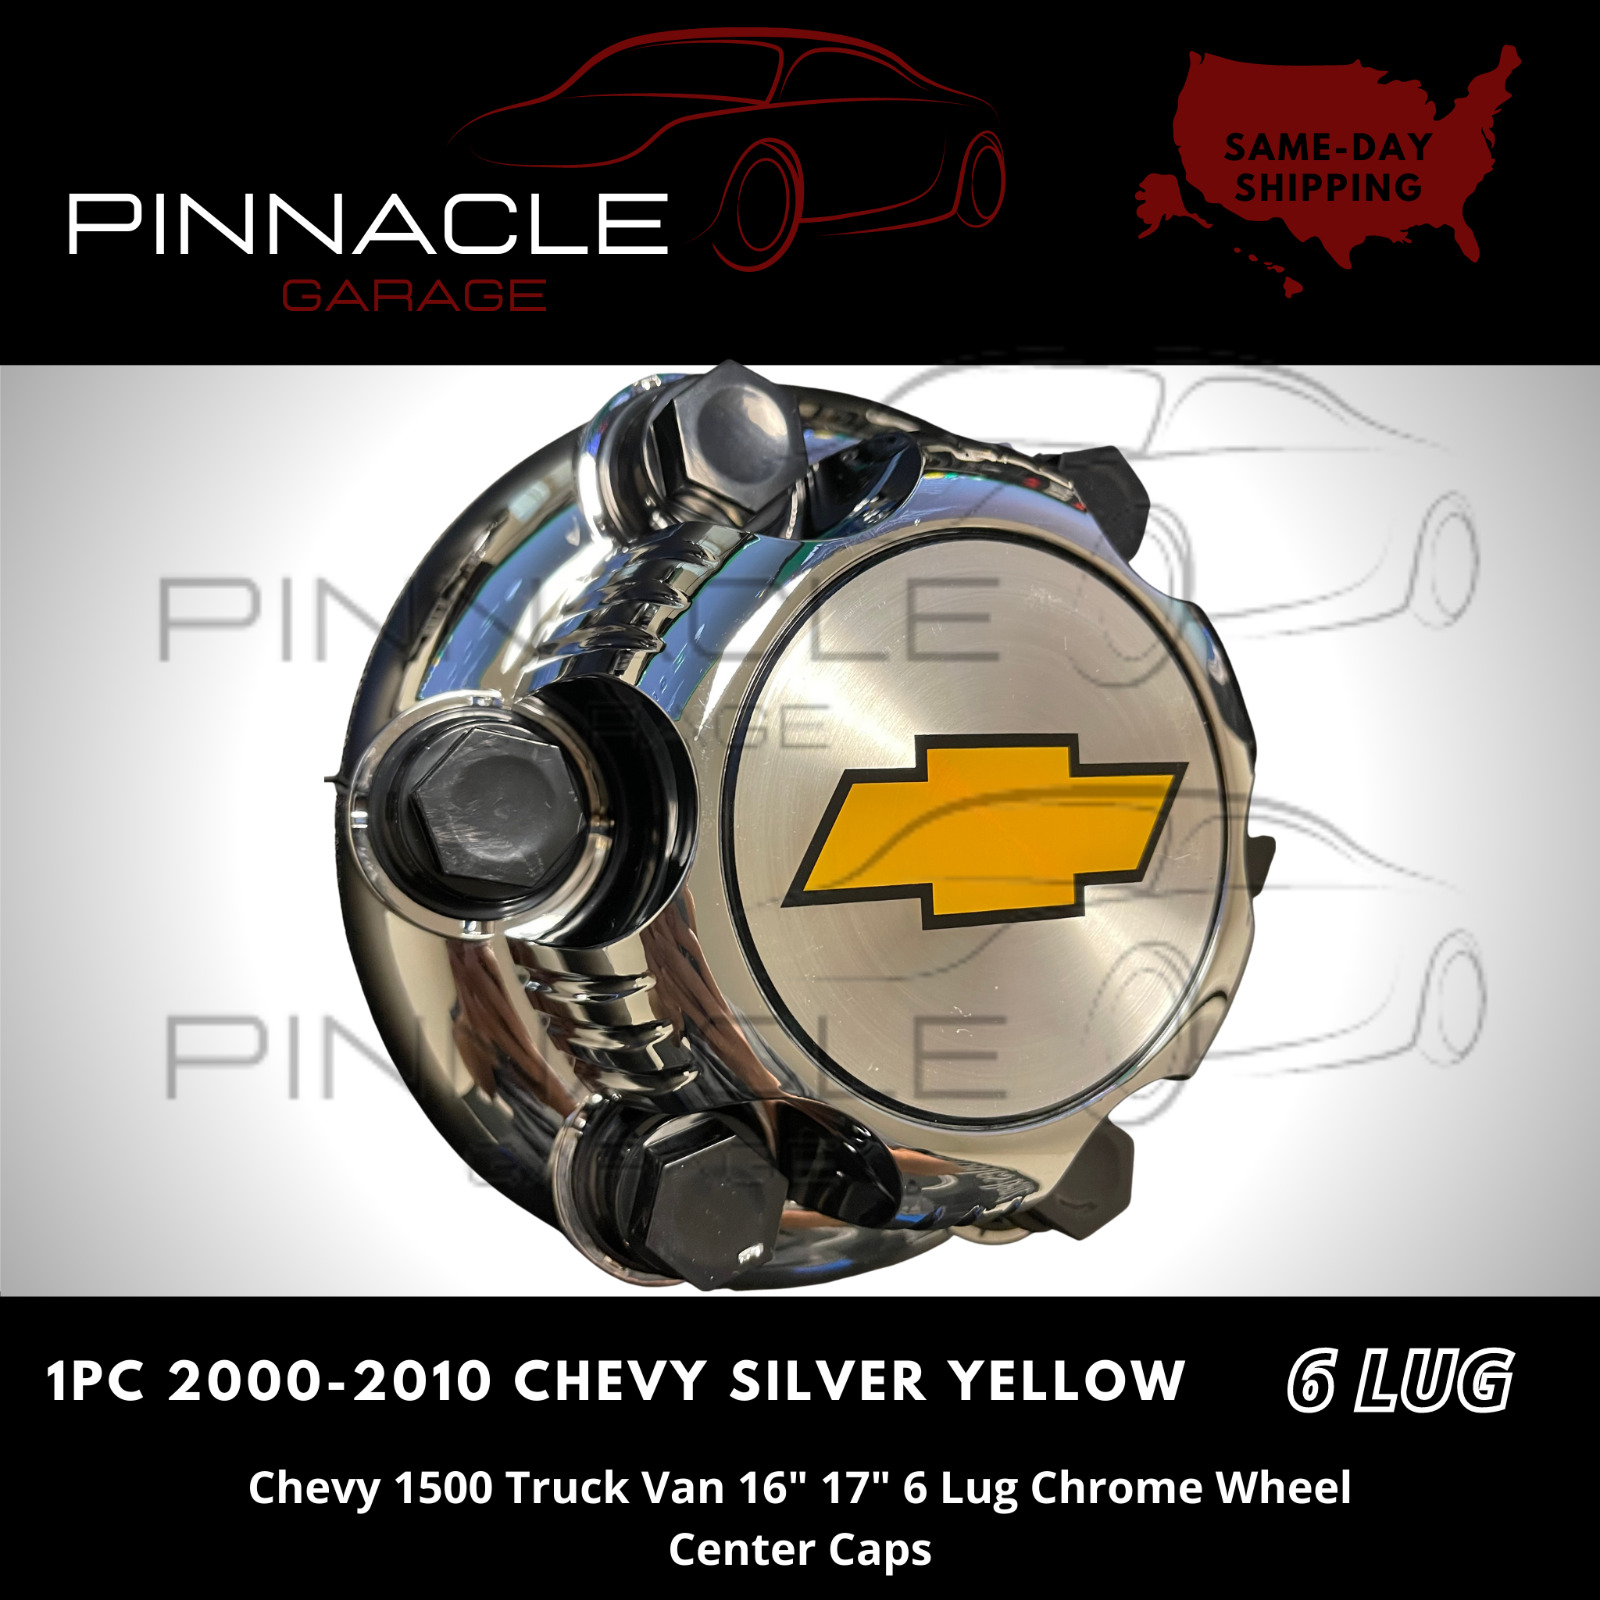 1x NEW 6 LUG Chevy Wheel Center Hub Cap Cover fits 99-06 Silverado Sierra 1500